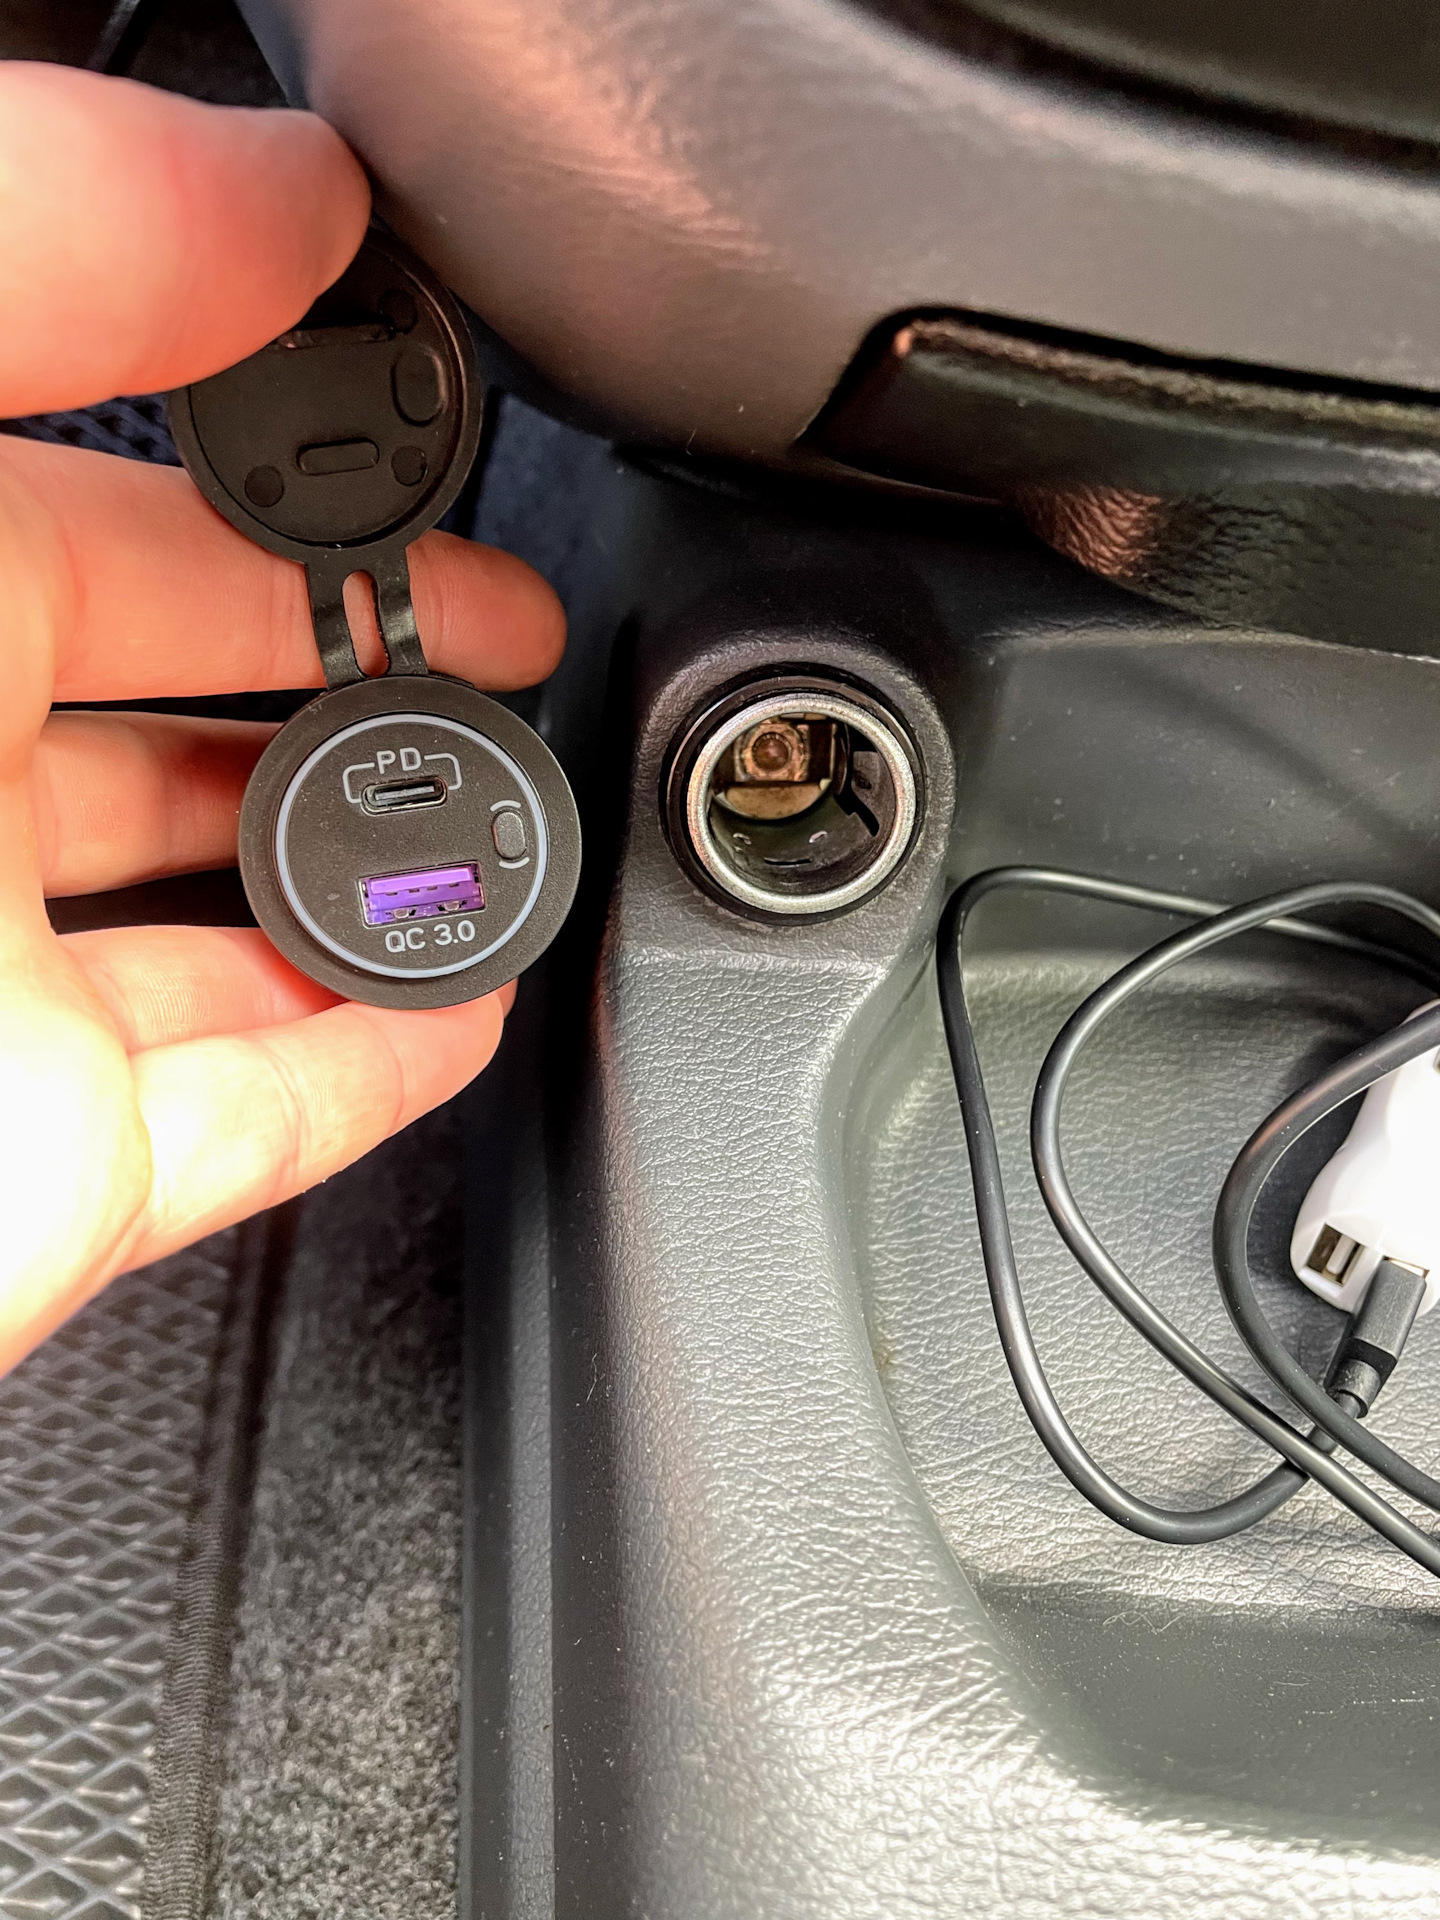 Usb car charger вместо прикуривателя